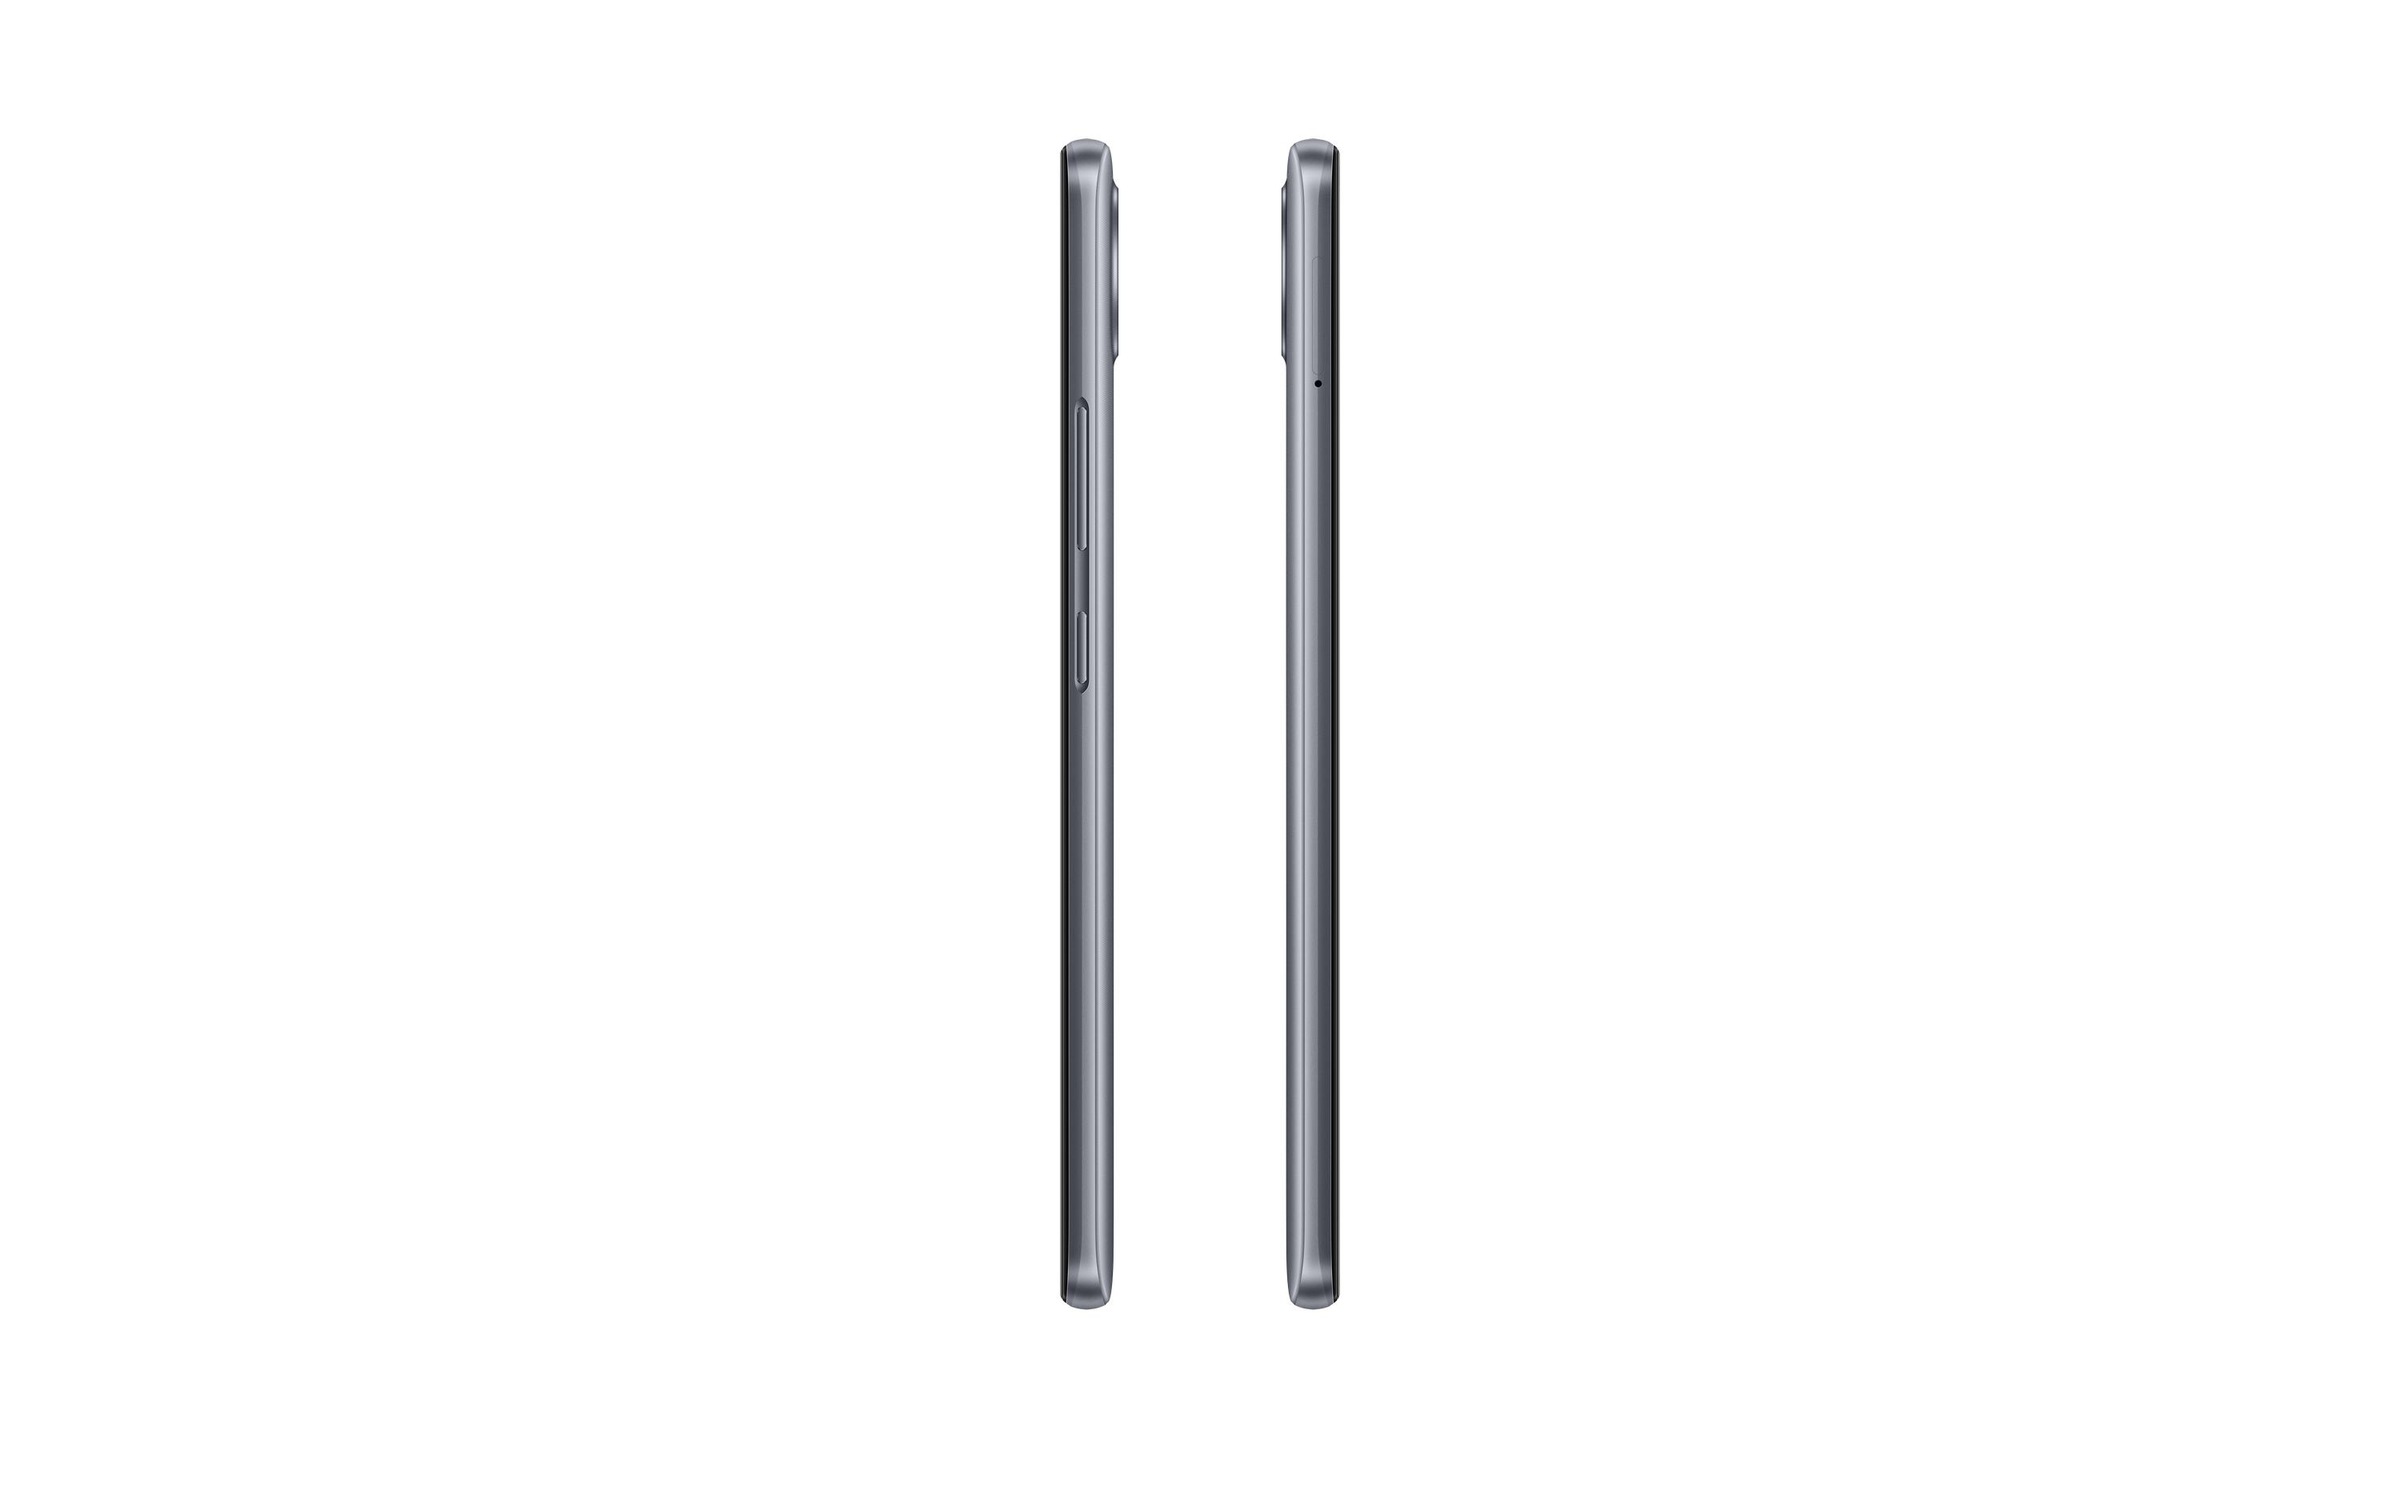 Realme Smartphone »C11 32GB Pepper Grey«, grau, 16,51 cm/6,5 Zoll